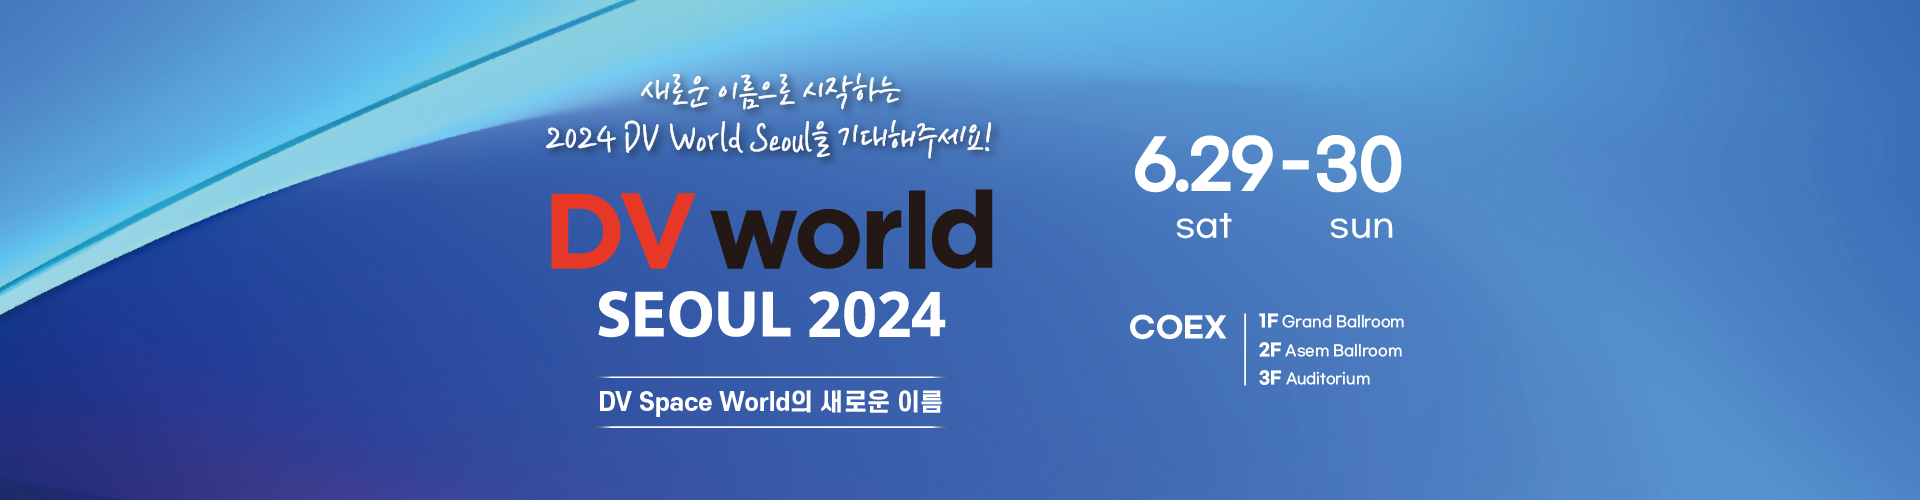 DV World Seoul 2024